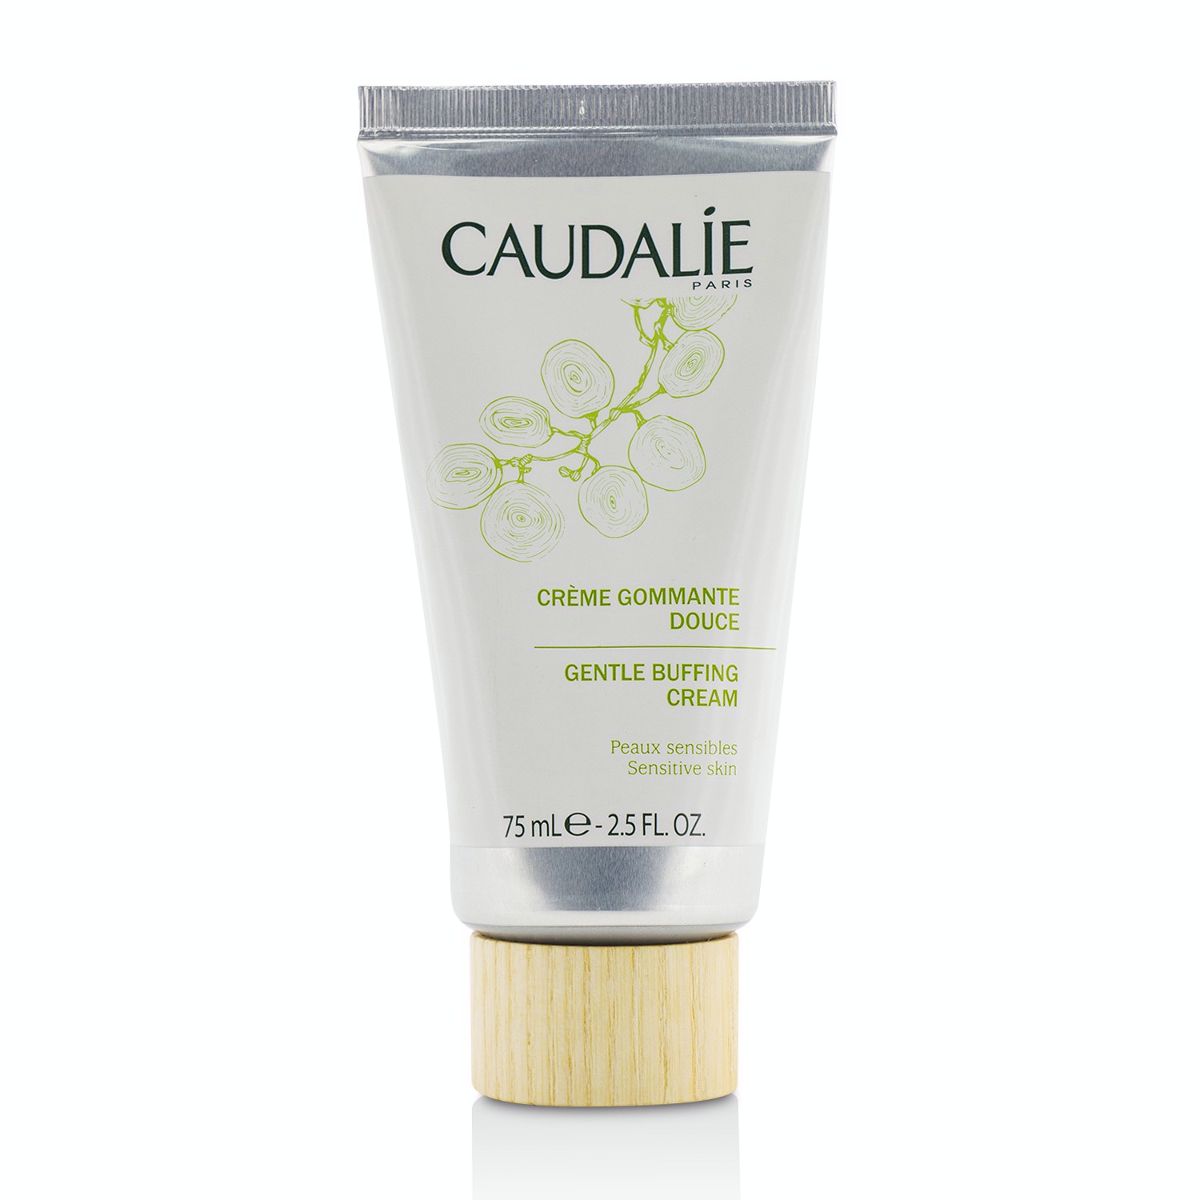 Gentle Buffing Cream - Sensitive skin Caudalie Image